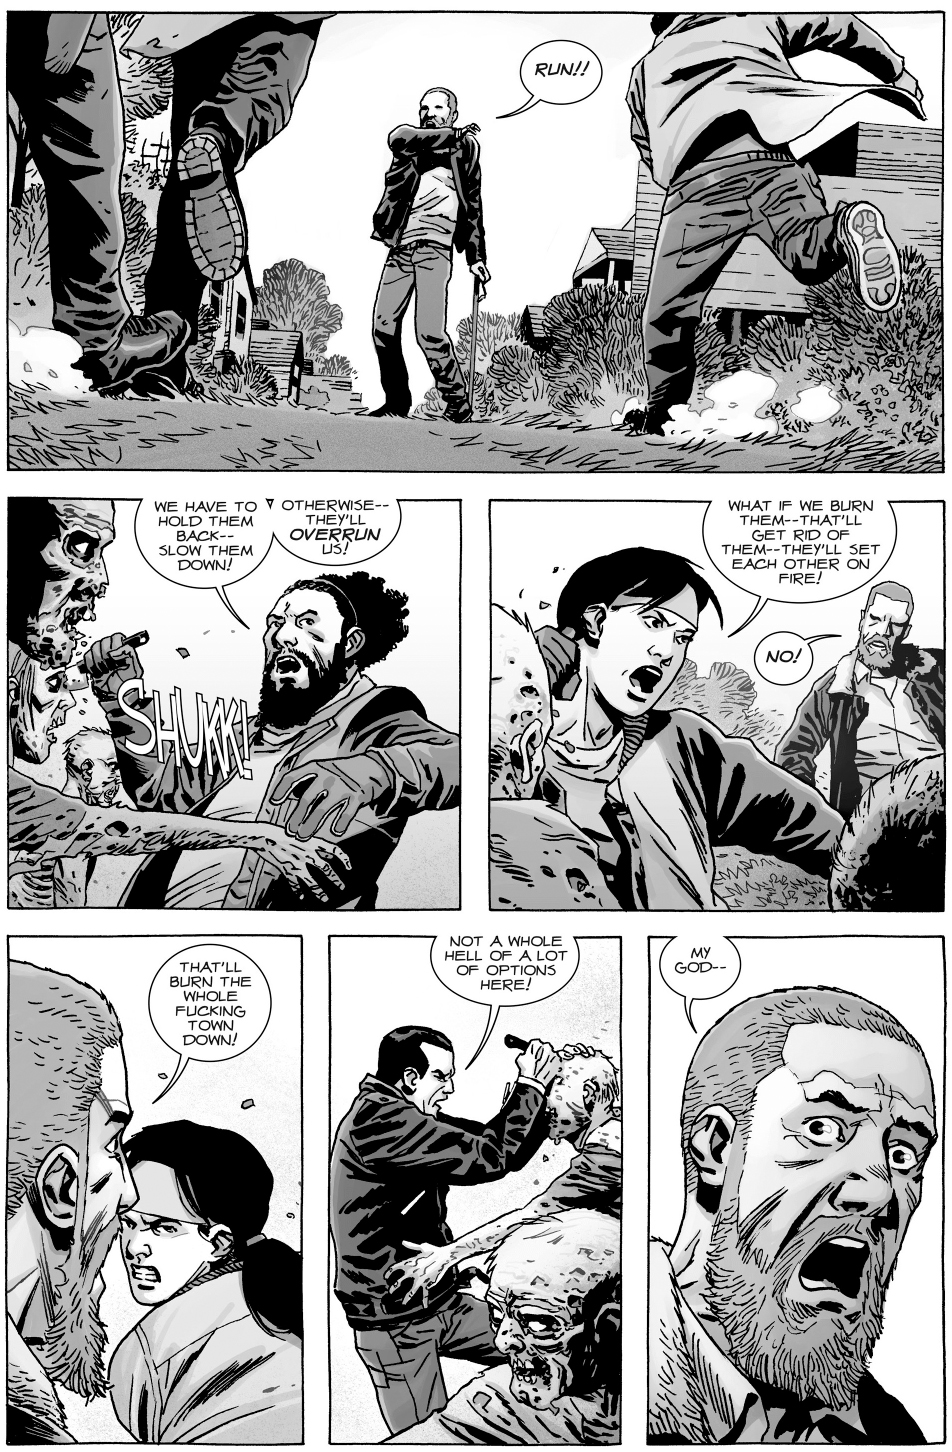 Negan Saves Rick Grimes (The Walking Dead)